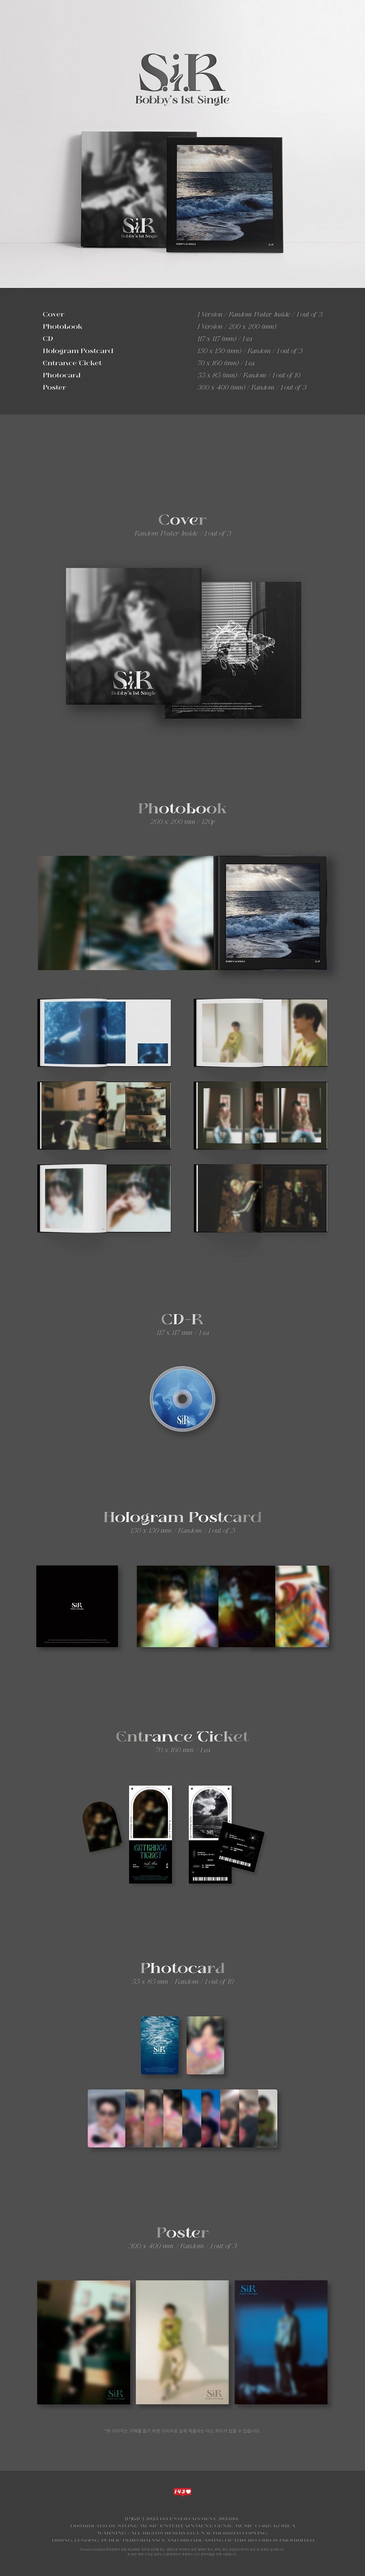 iKON: BOBBY 1st Solo Single Album - S.i.R